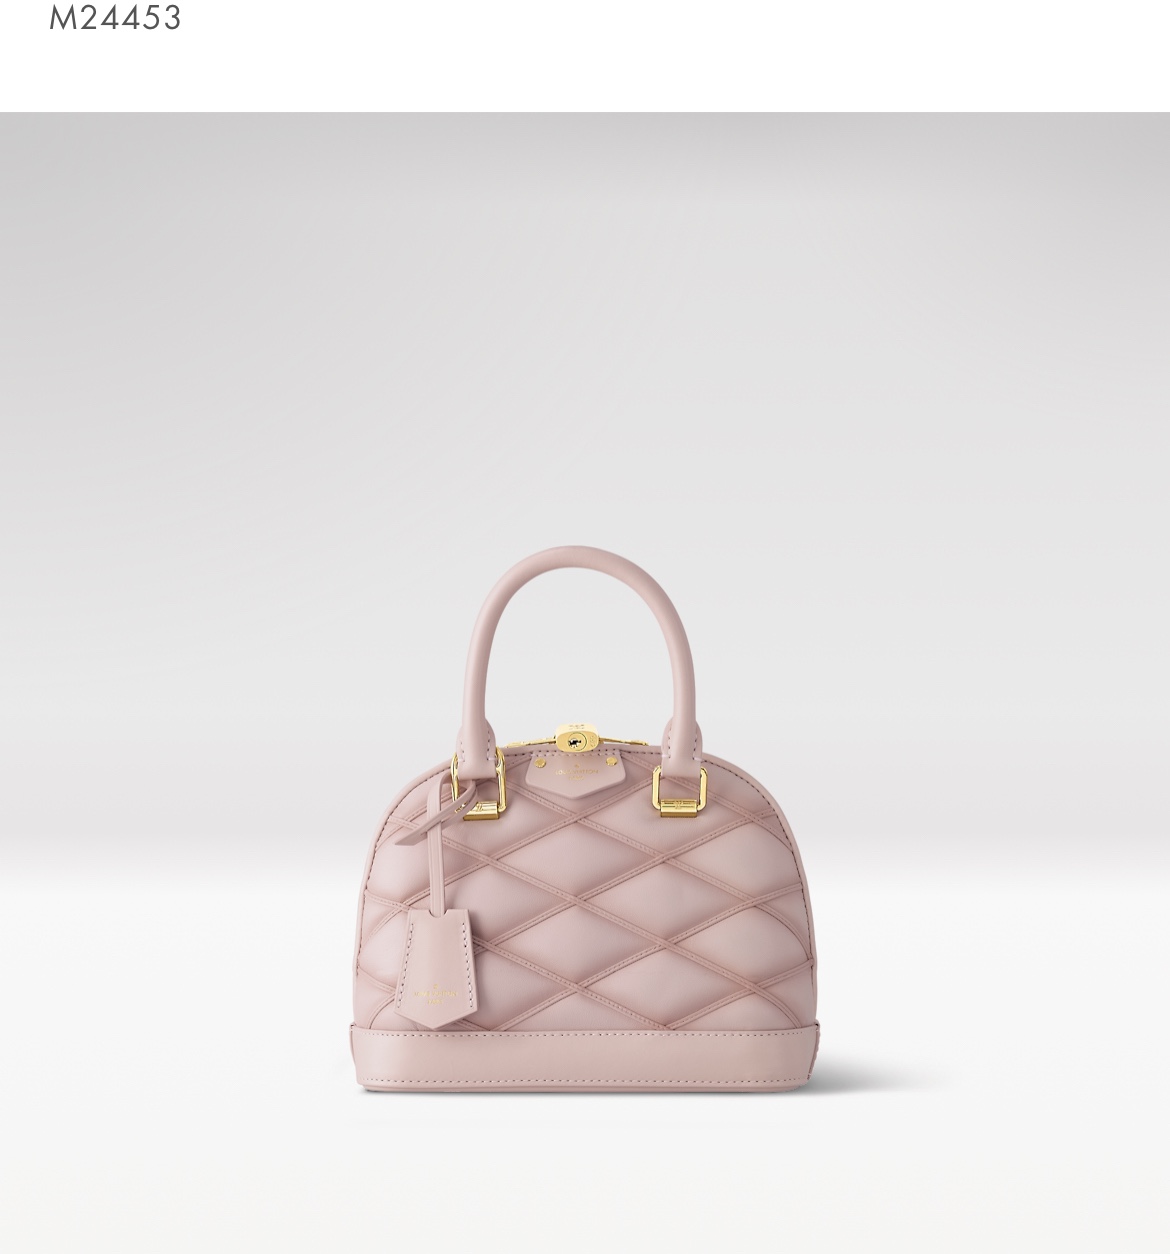 Louis Vuitton LV Alma BB Bags Handbags Pink Sheepskin M24453